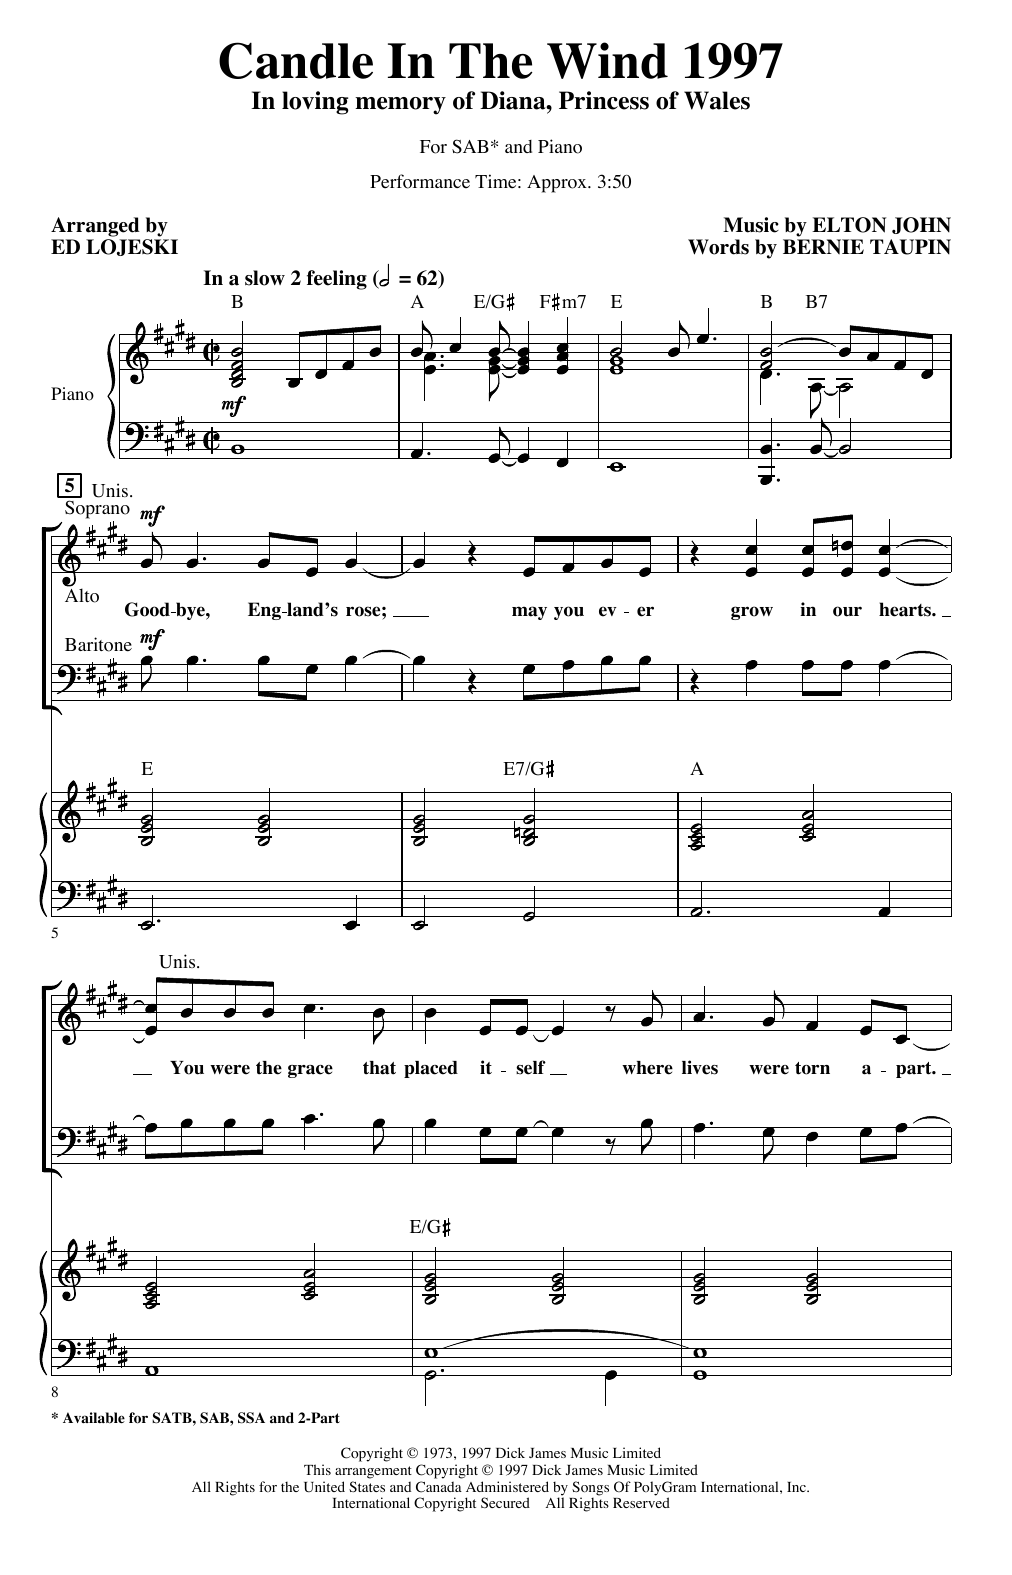 Elton John Candle In The Wind (arr. Ed Lojeski) Sheet Music Notes & Chords for SAB Choir - Download or Print PDF